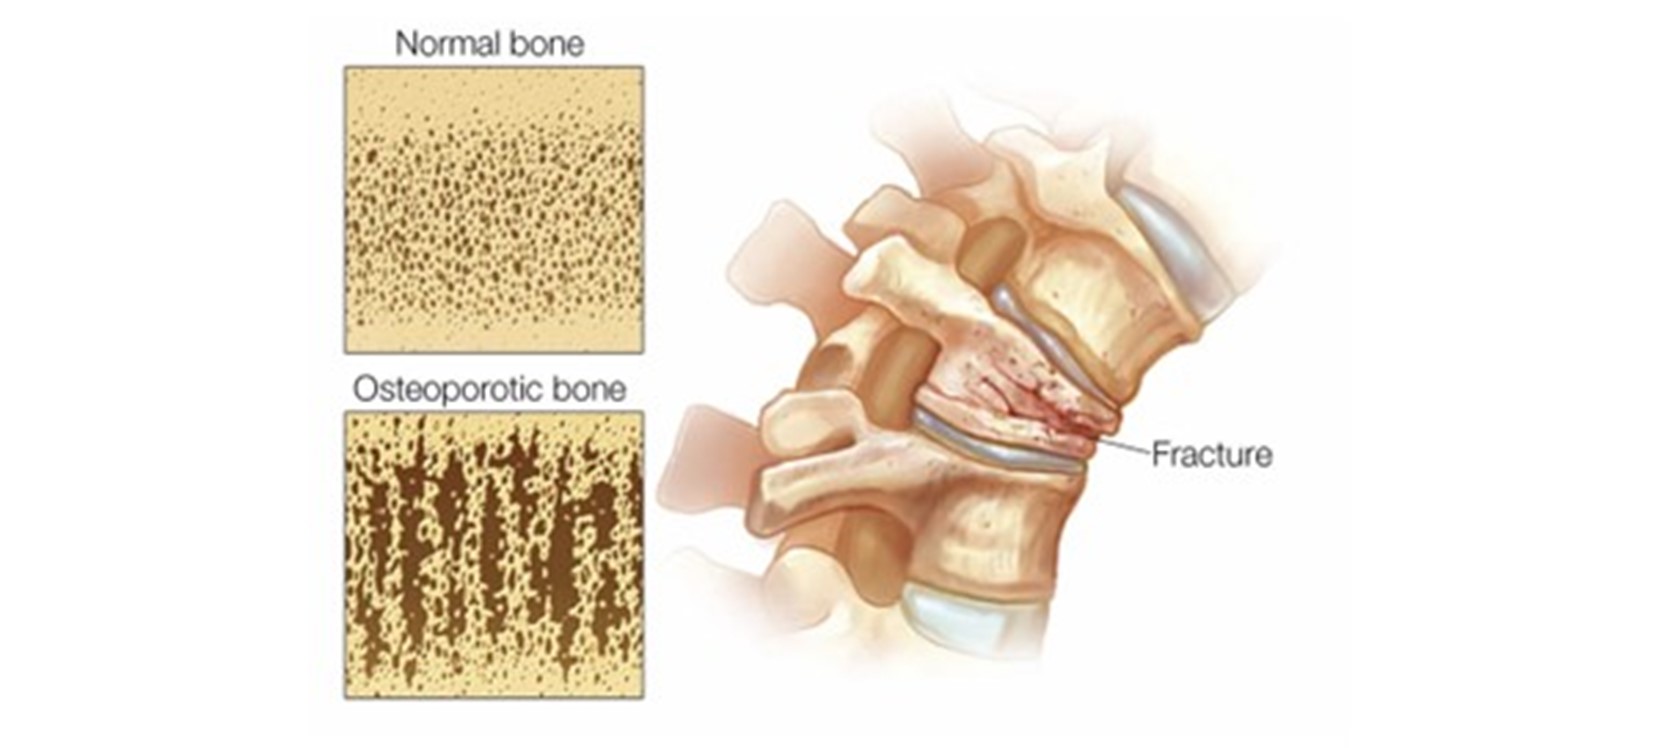 osteoporotic trauma